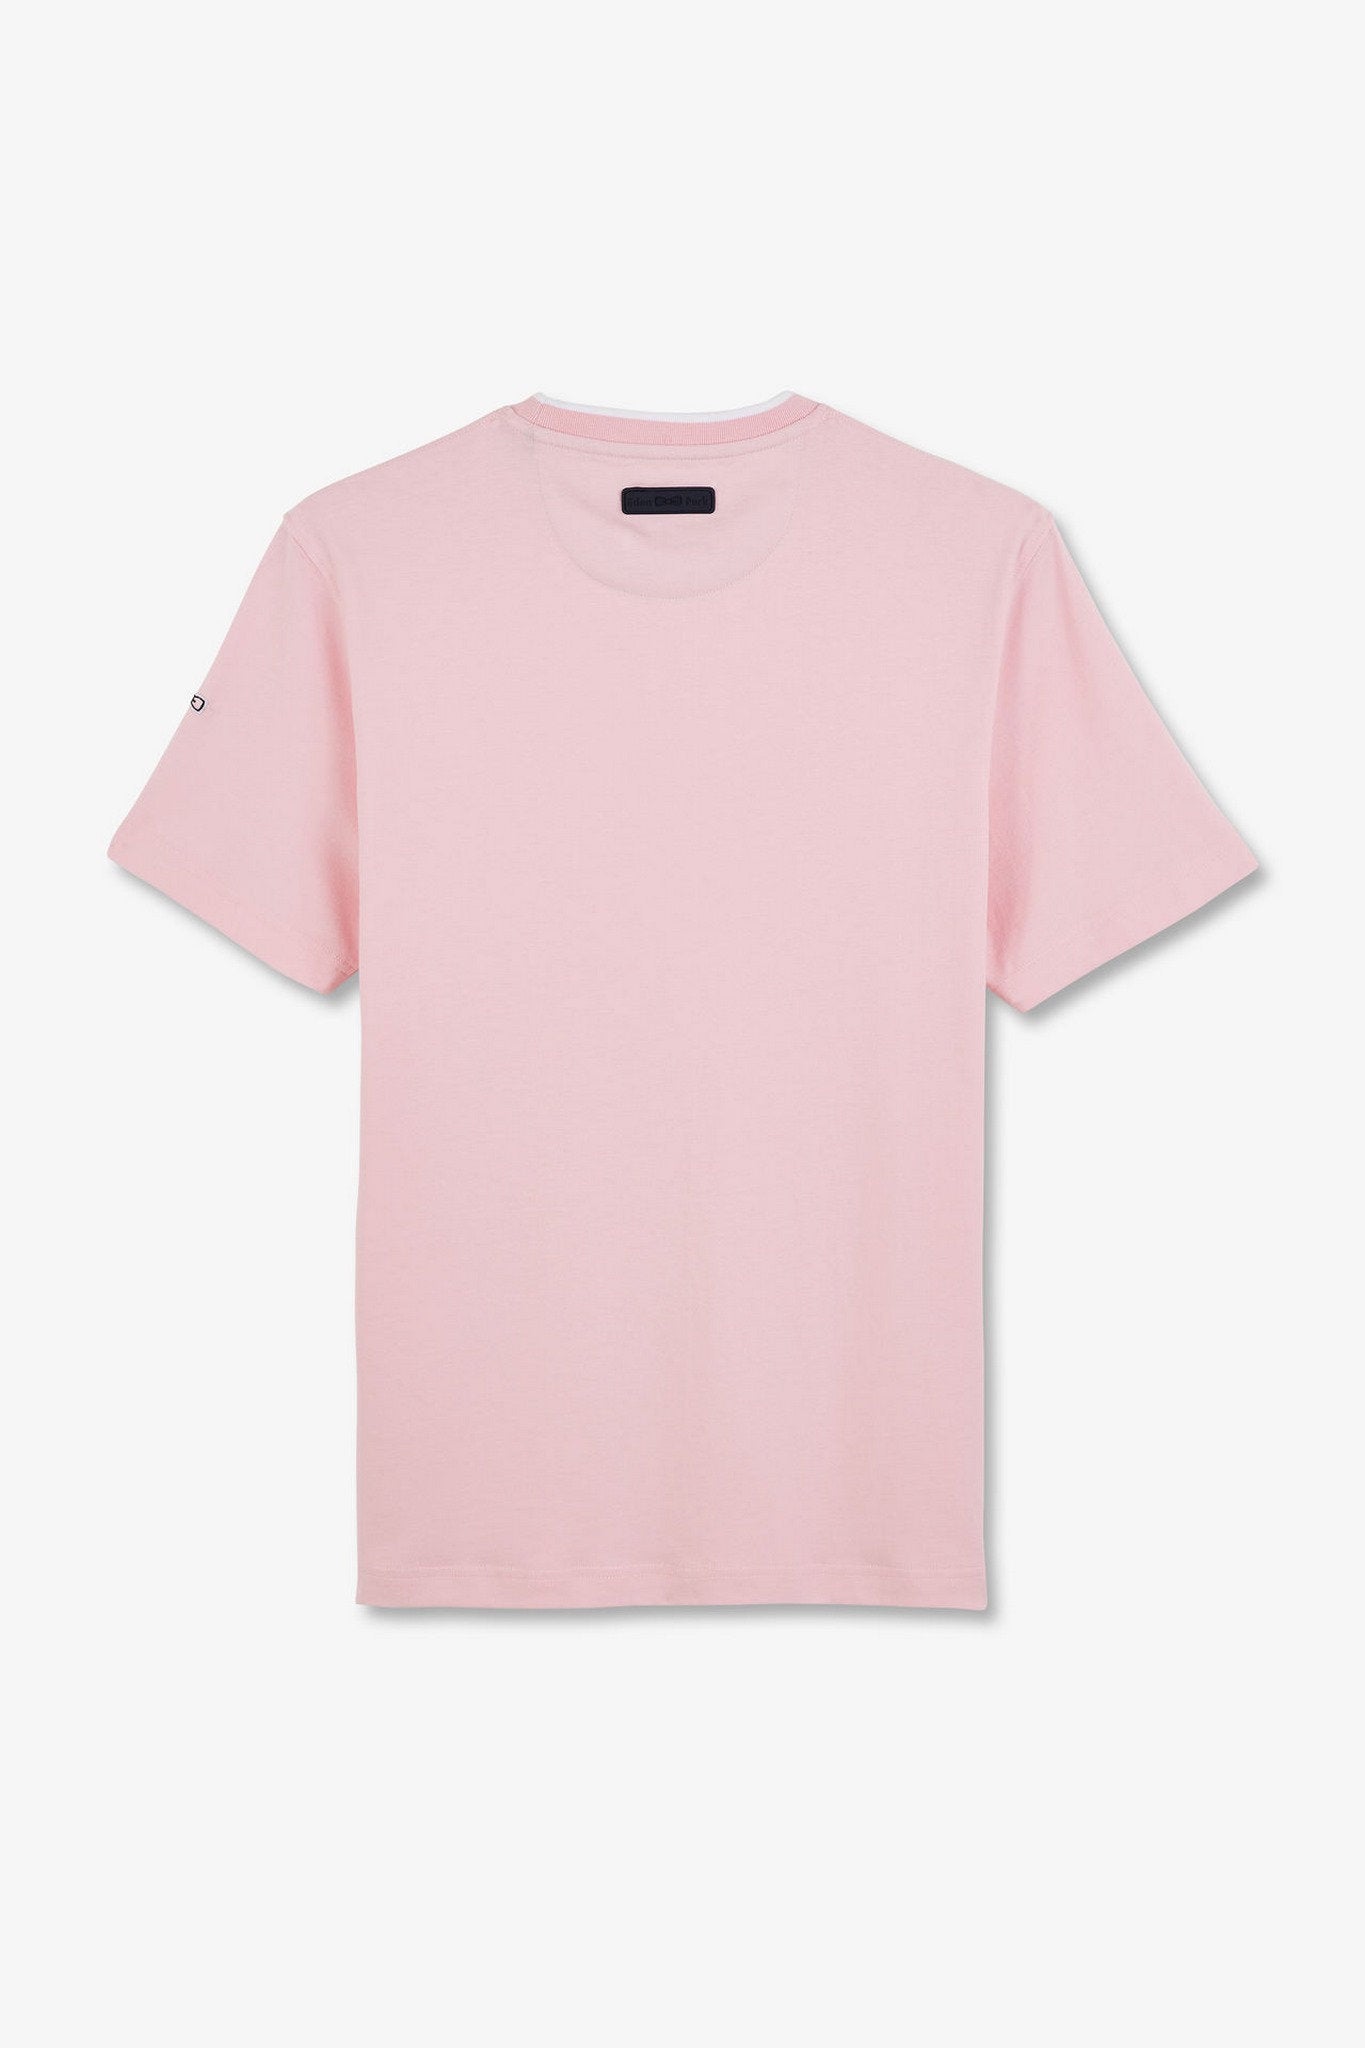 Plain Pink Short-Sleeved T-Shirt_E24MAITC0018_ROC16_05